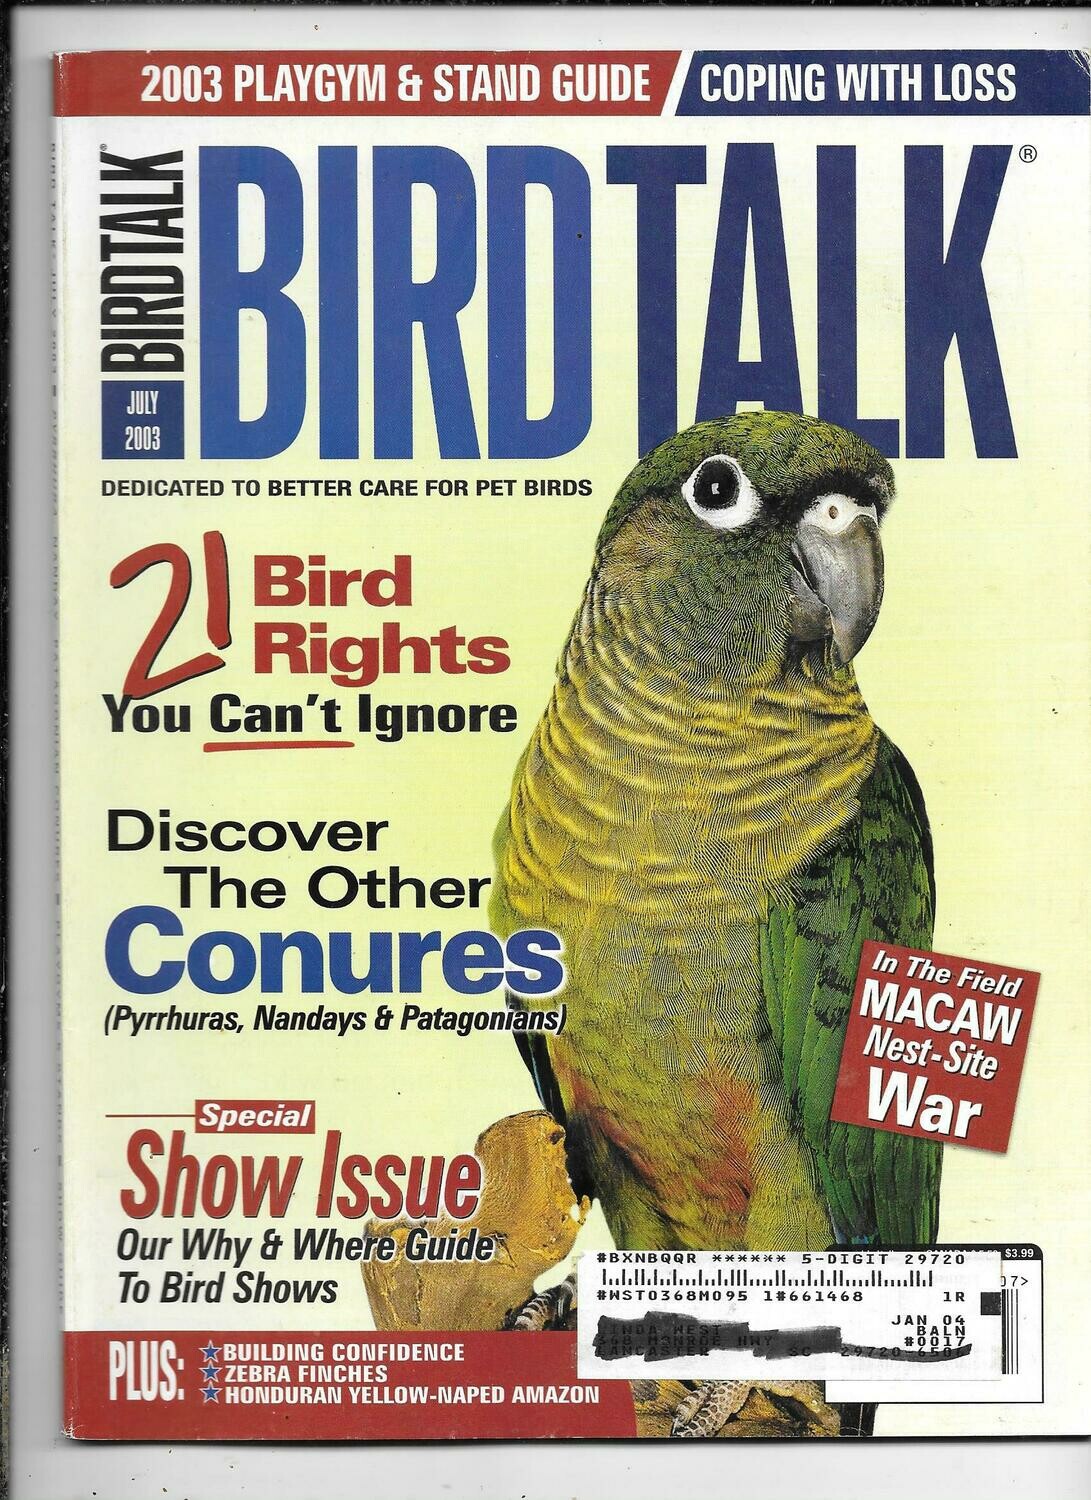 BirdTalk Magazine July 2003